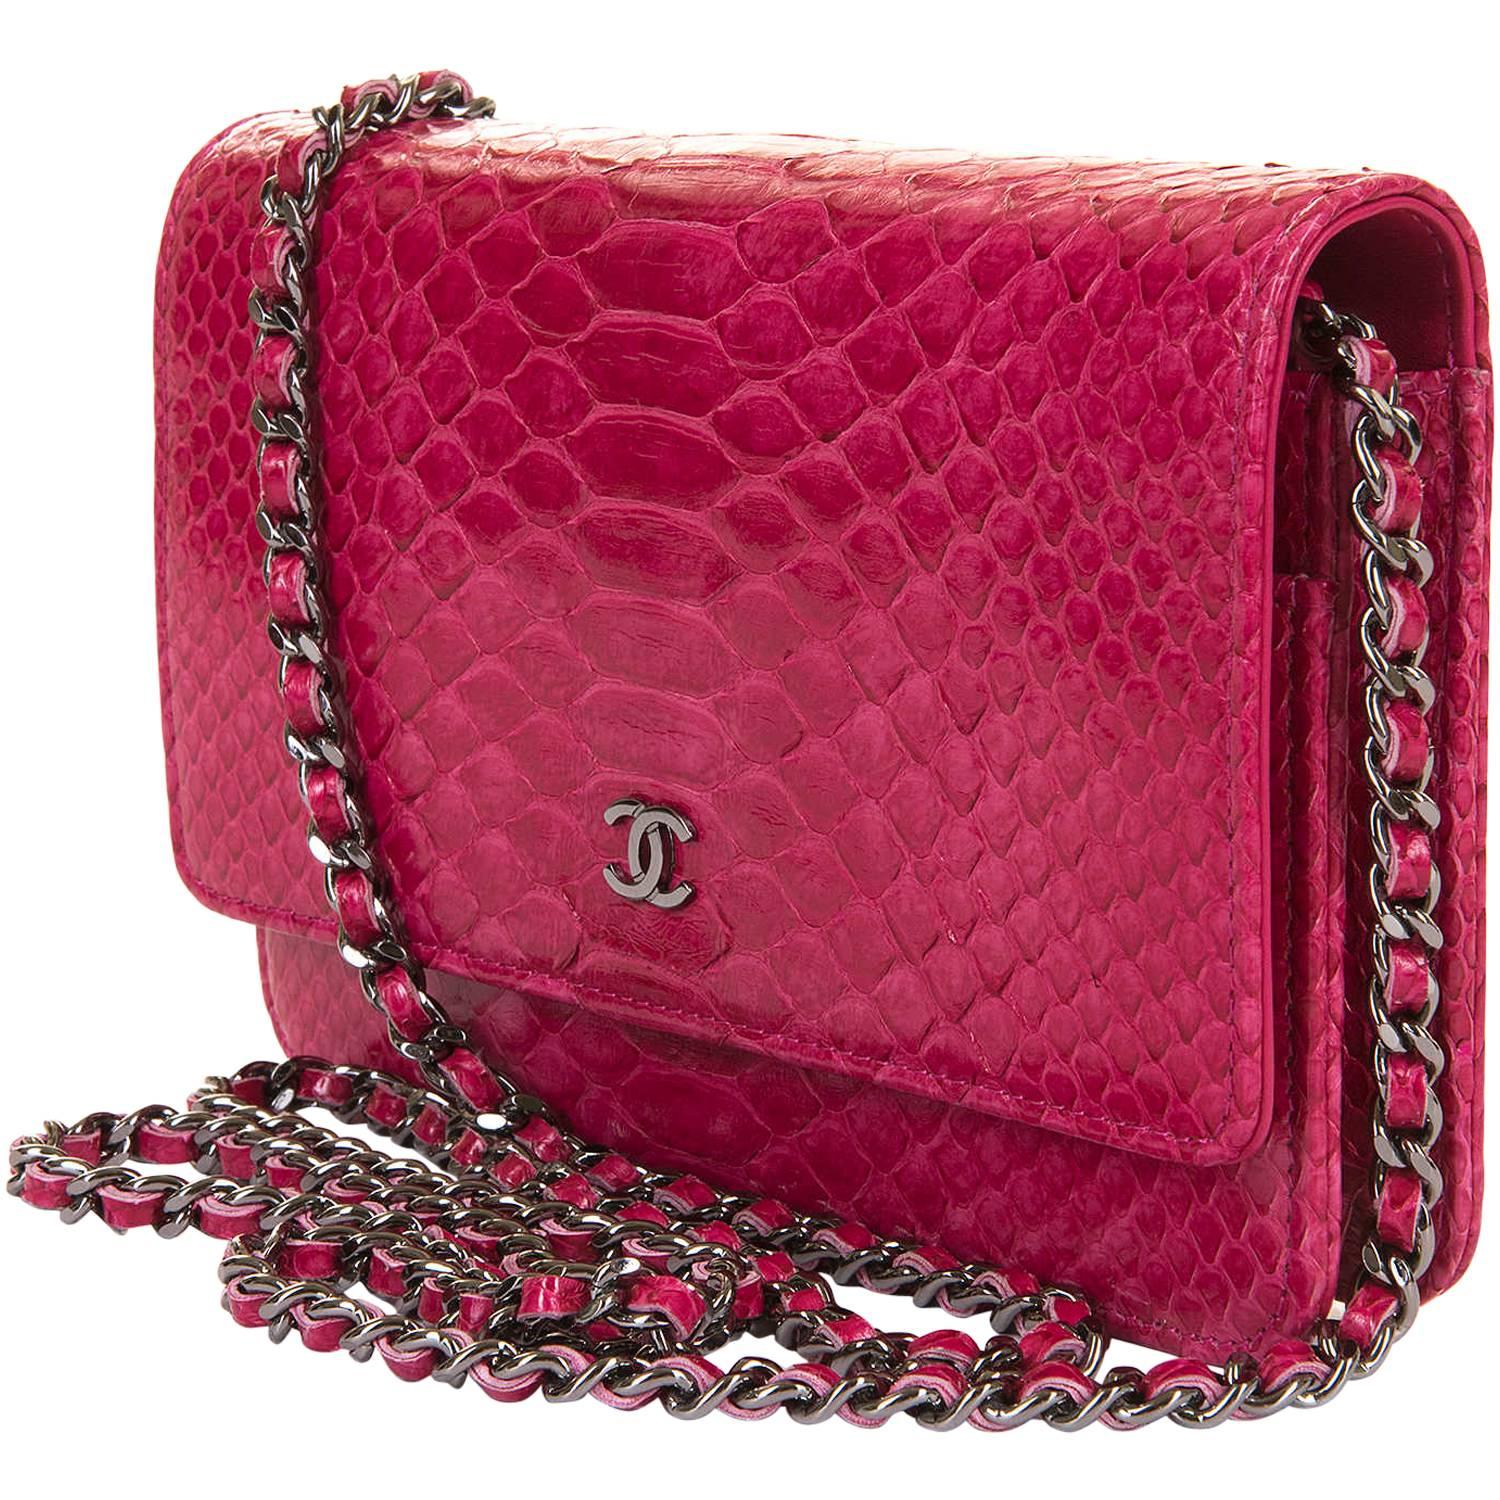 SO SO RARE Chanel 'Tres Chic' WOC Bag in Fushia Pink Python with SHW - Pristine 